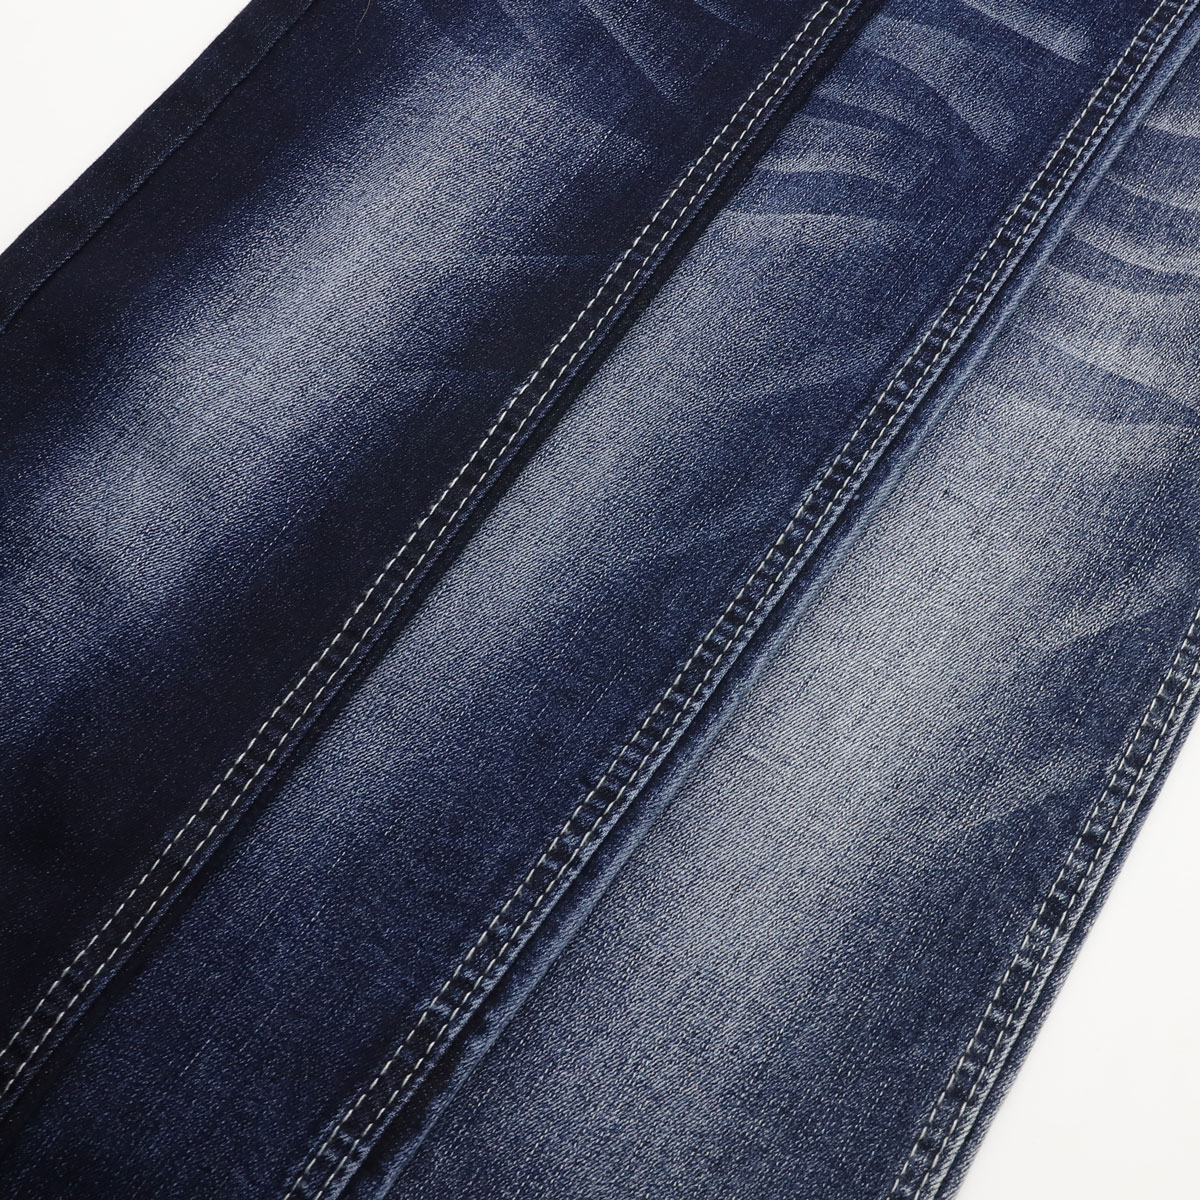 155a-8 10.2 oz 68.5% Cotton stretch denim fabric with slub for women/men's jeans/skirts/shorts